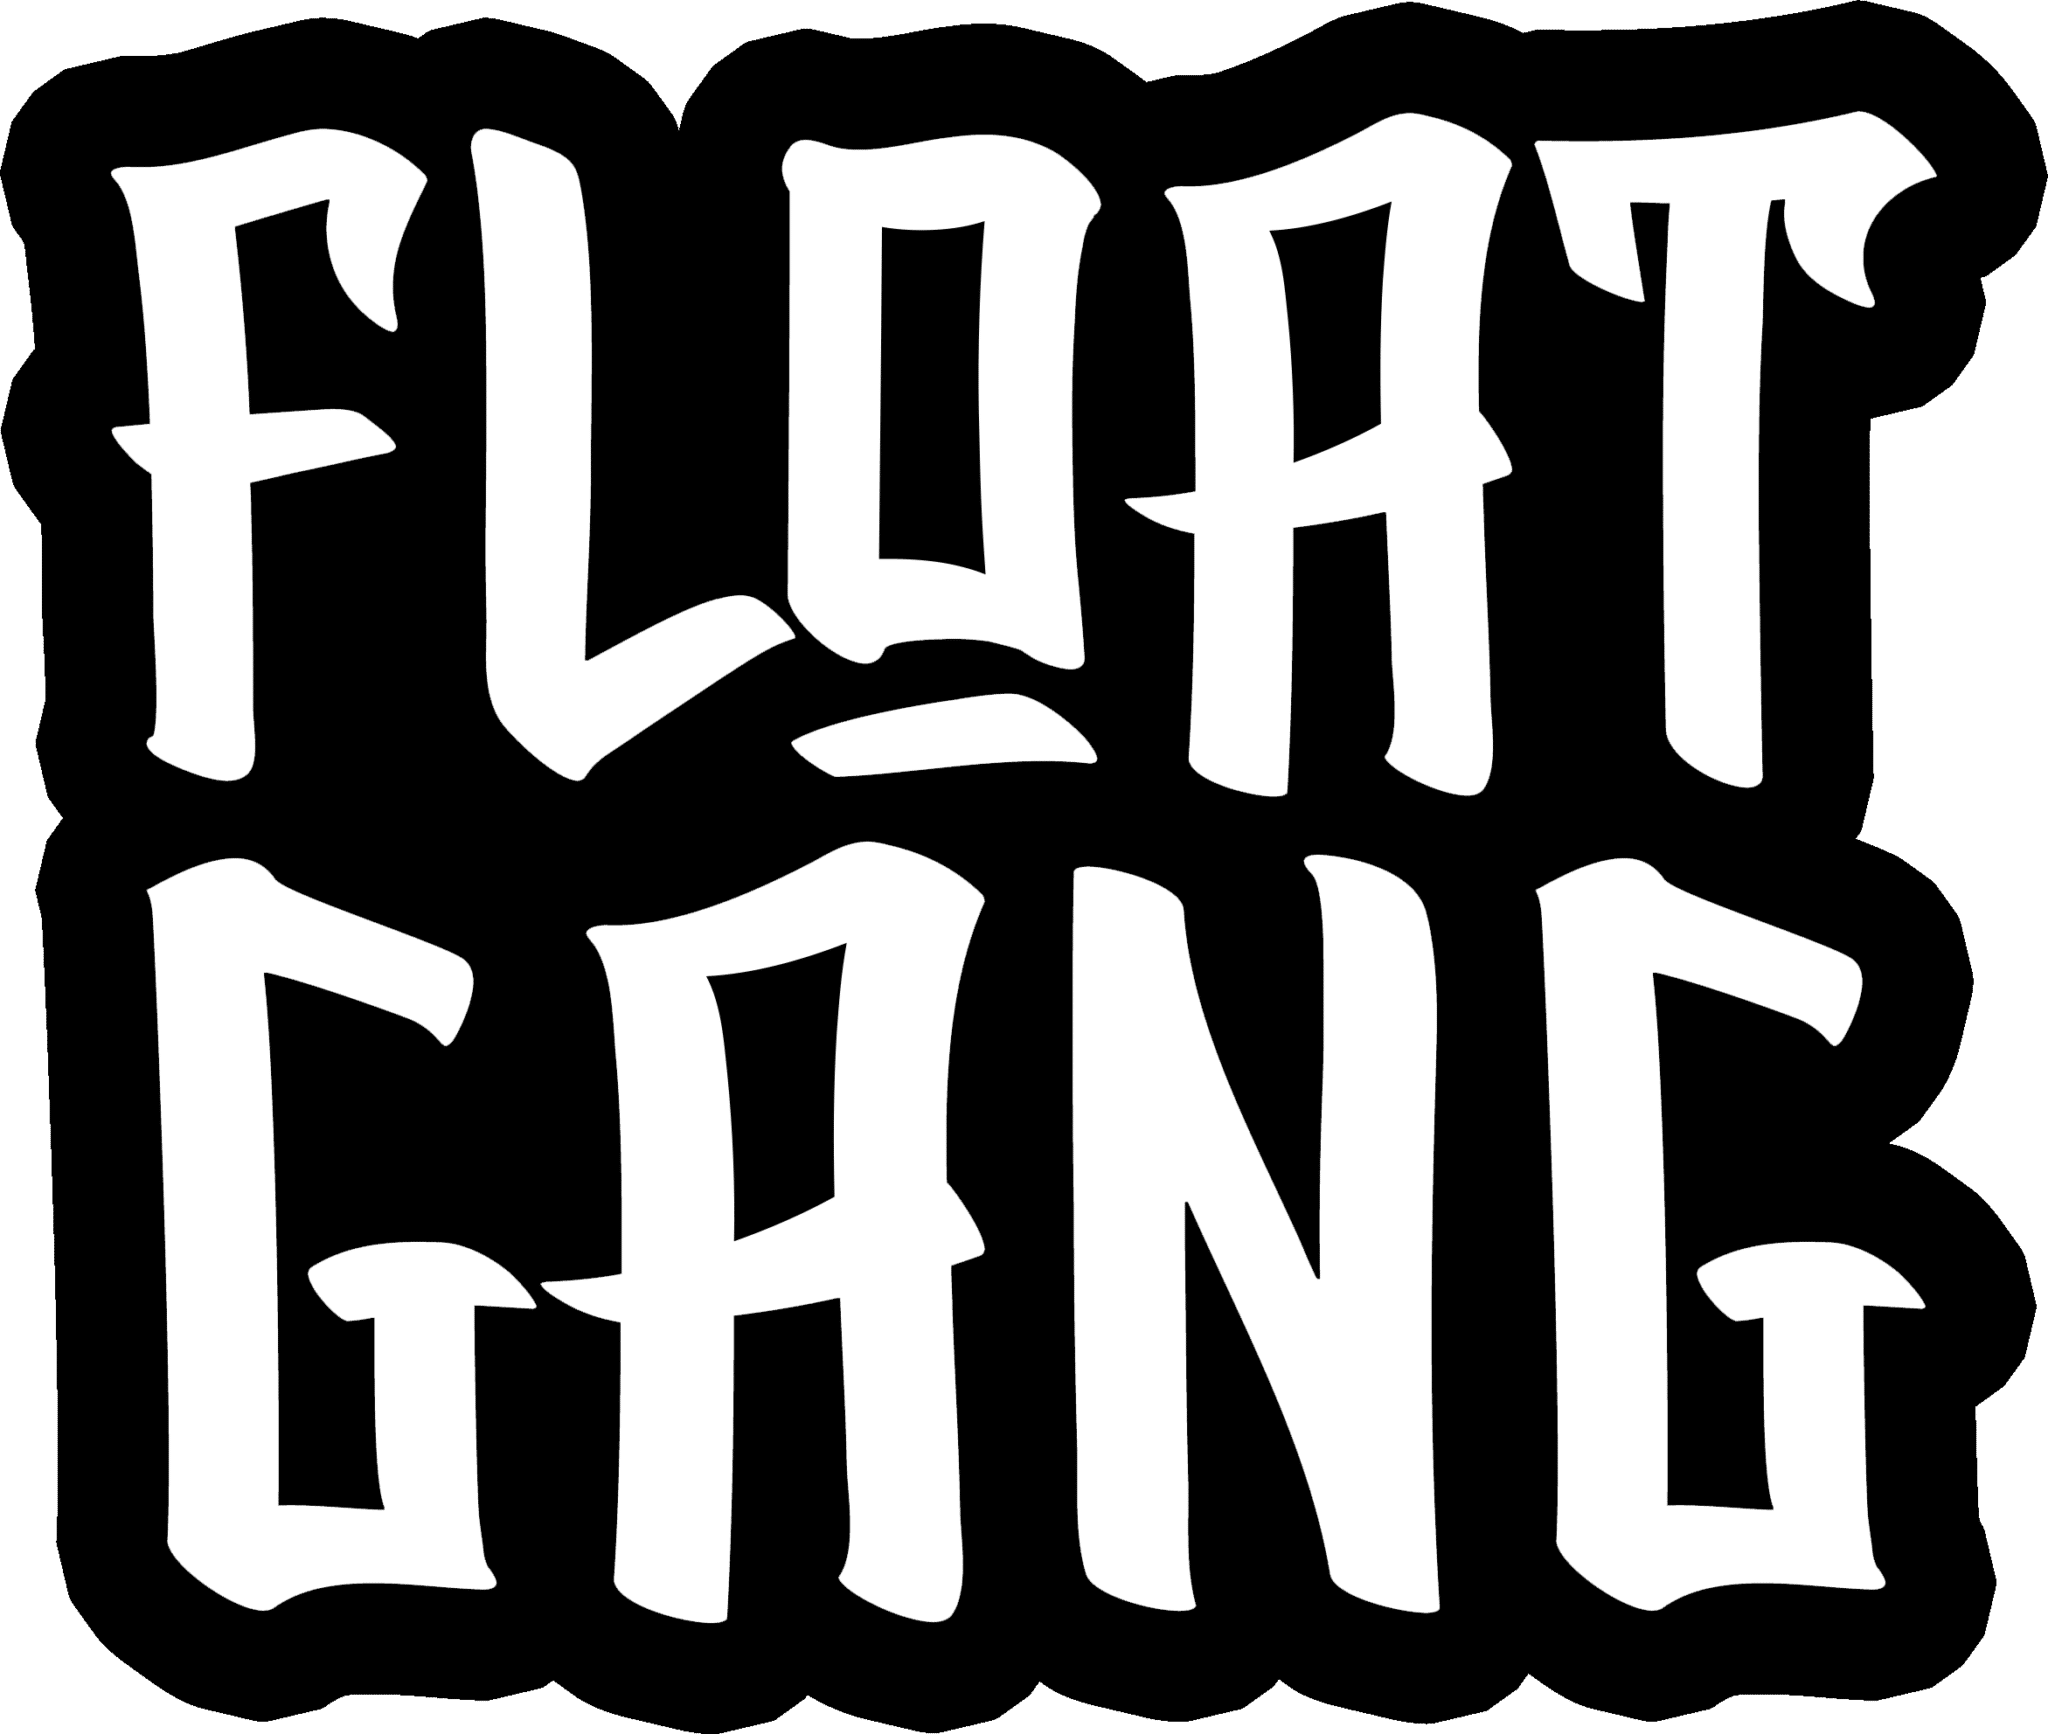 Float Gang